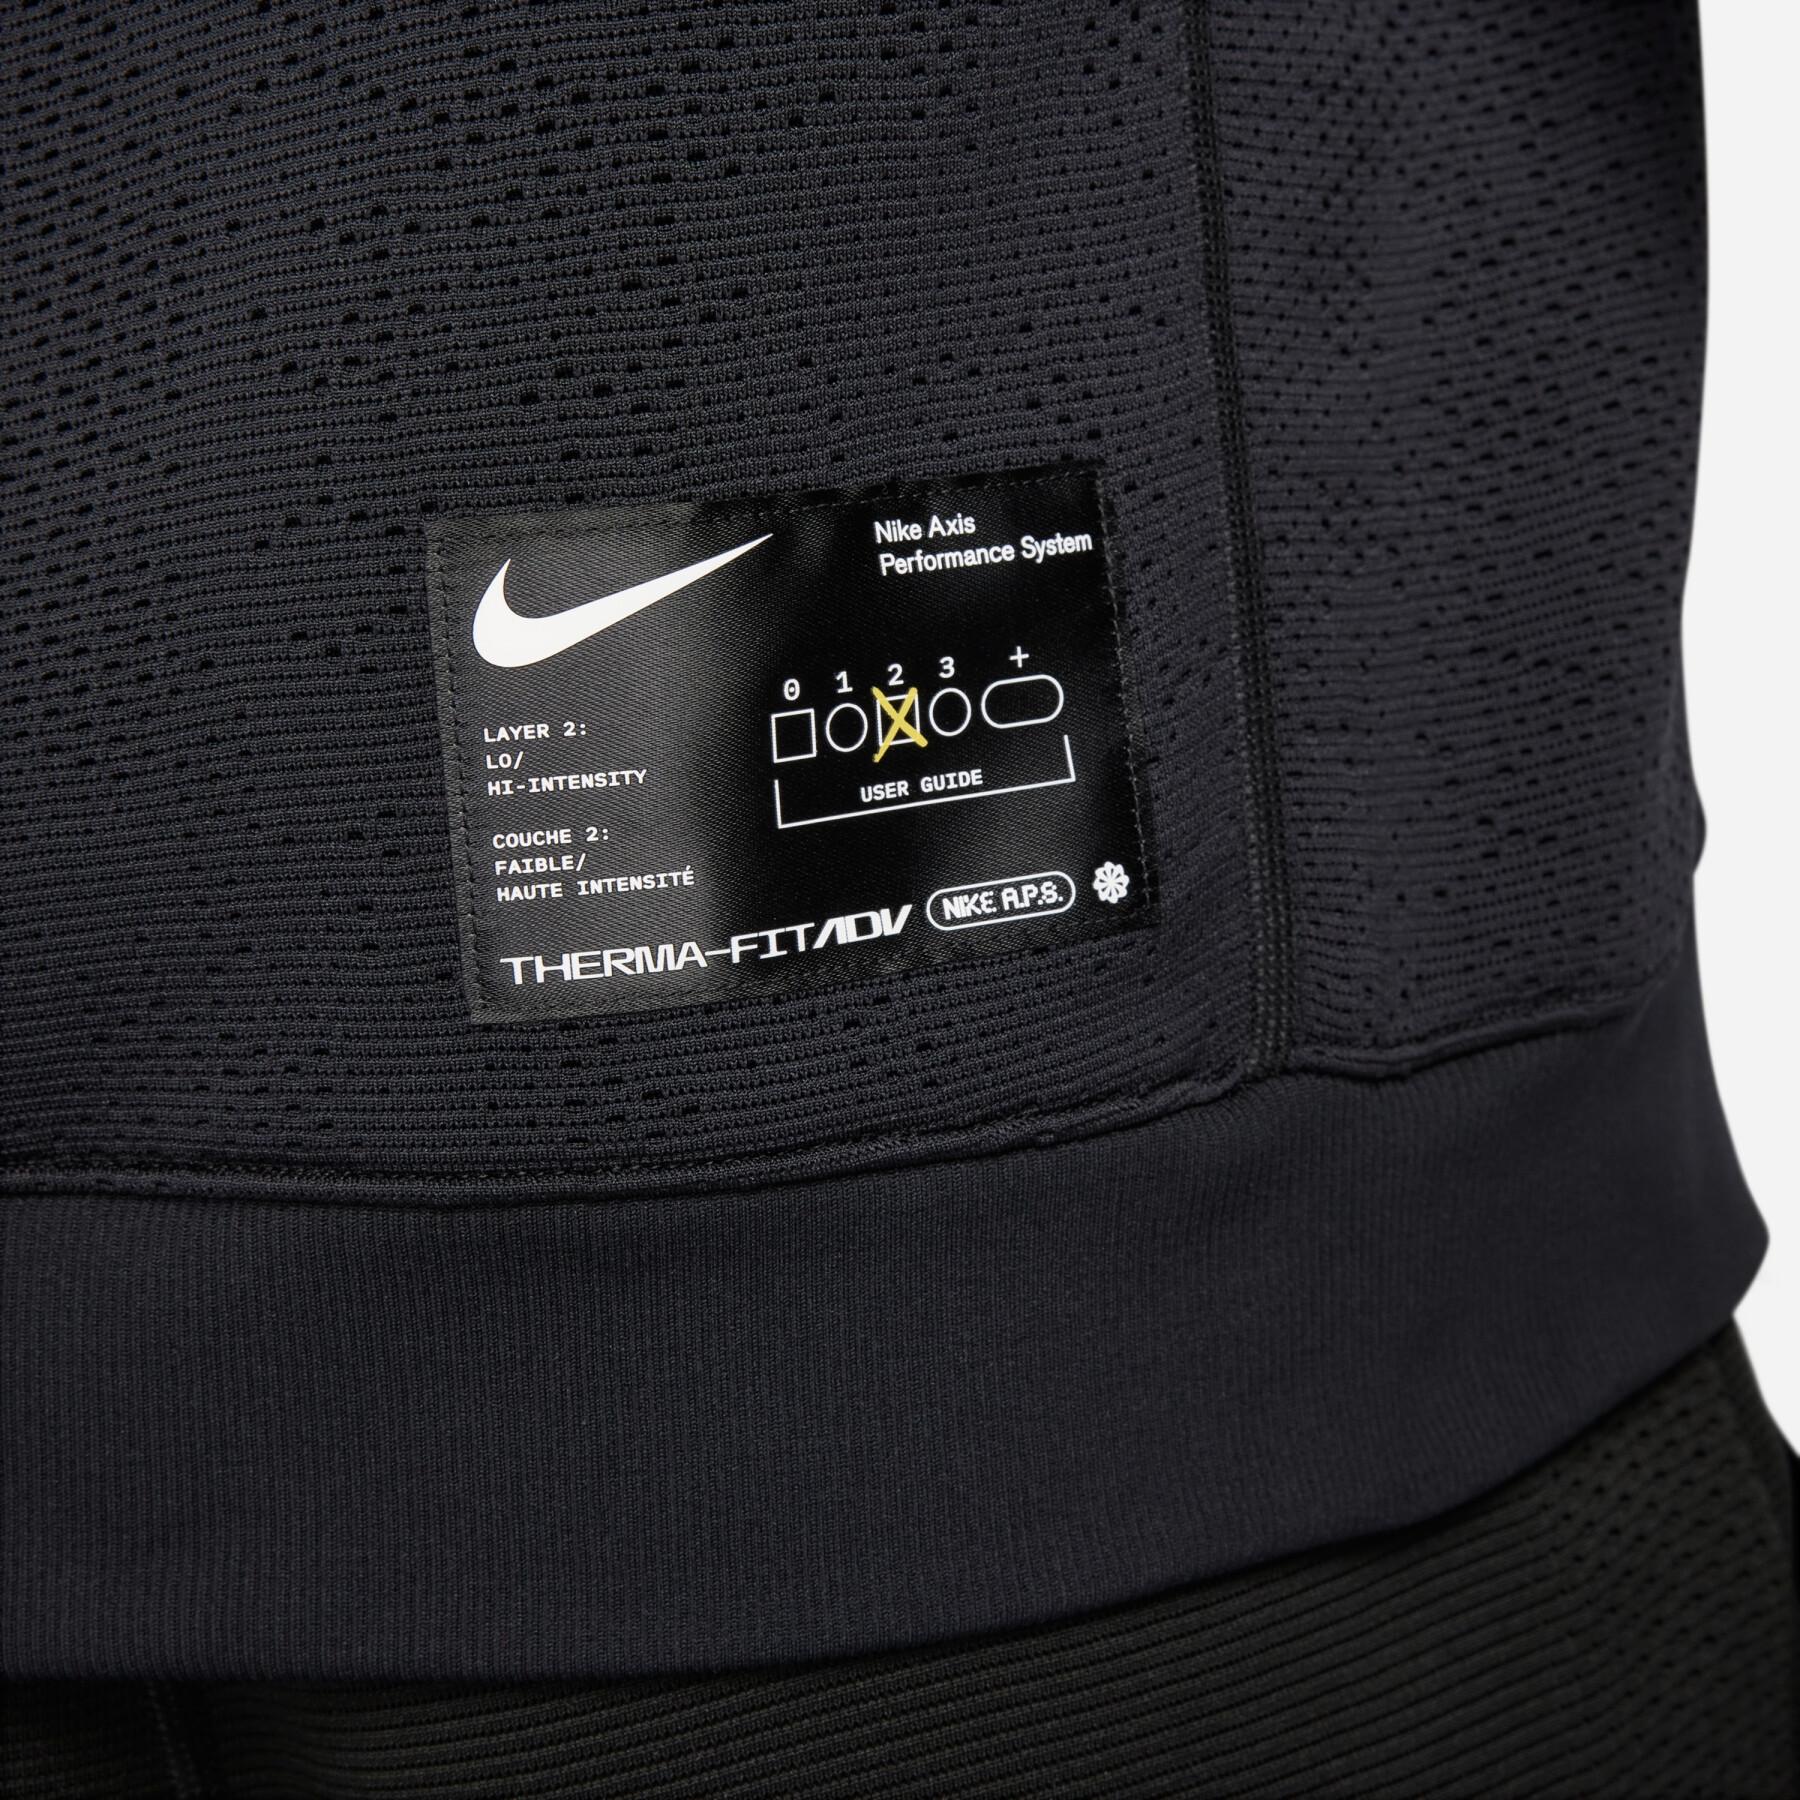 Hooded sweatshirt Nike Axis Performance System